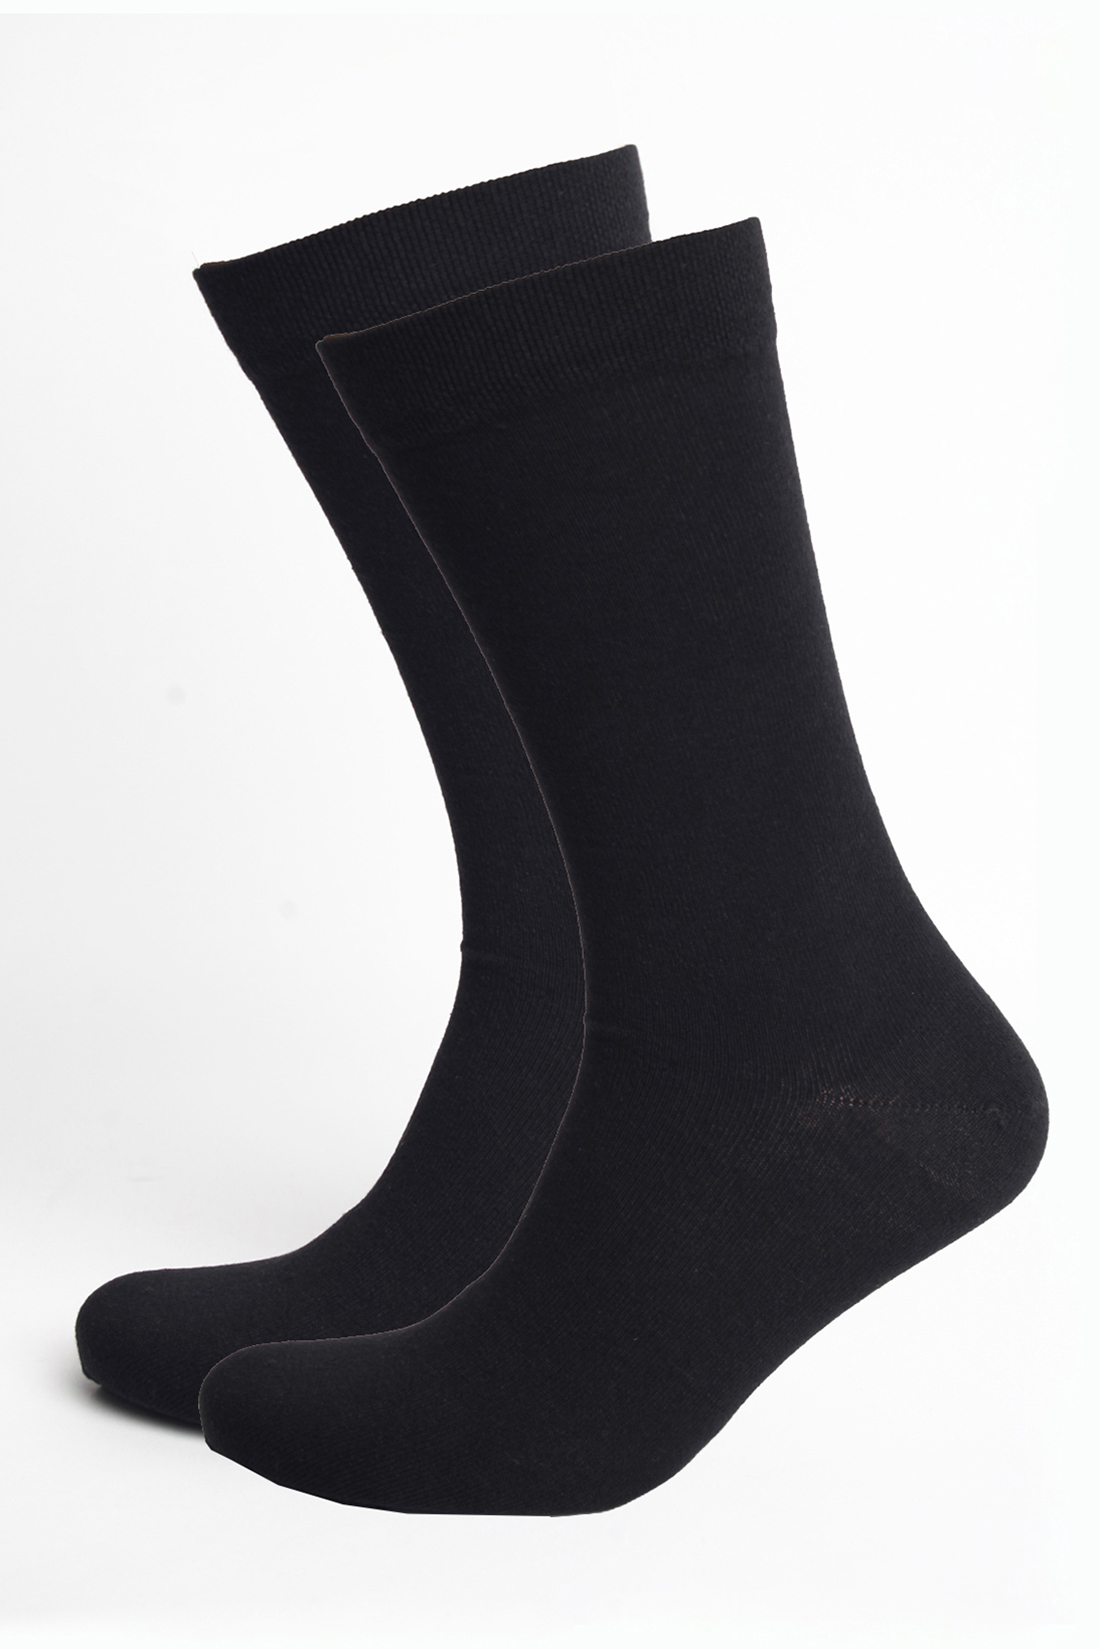 Мужские носки, 2 пары (арт. baon B891107), размер 40/42, цвет черный